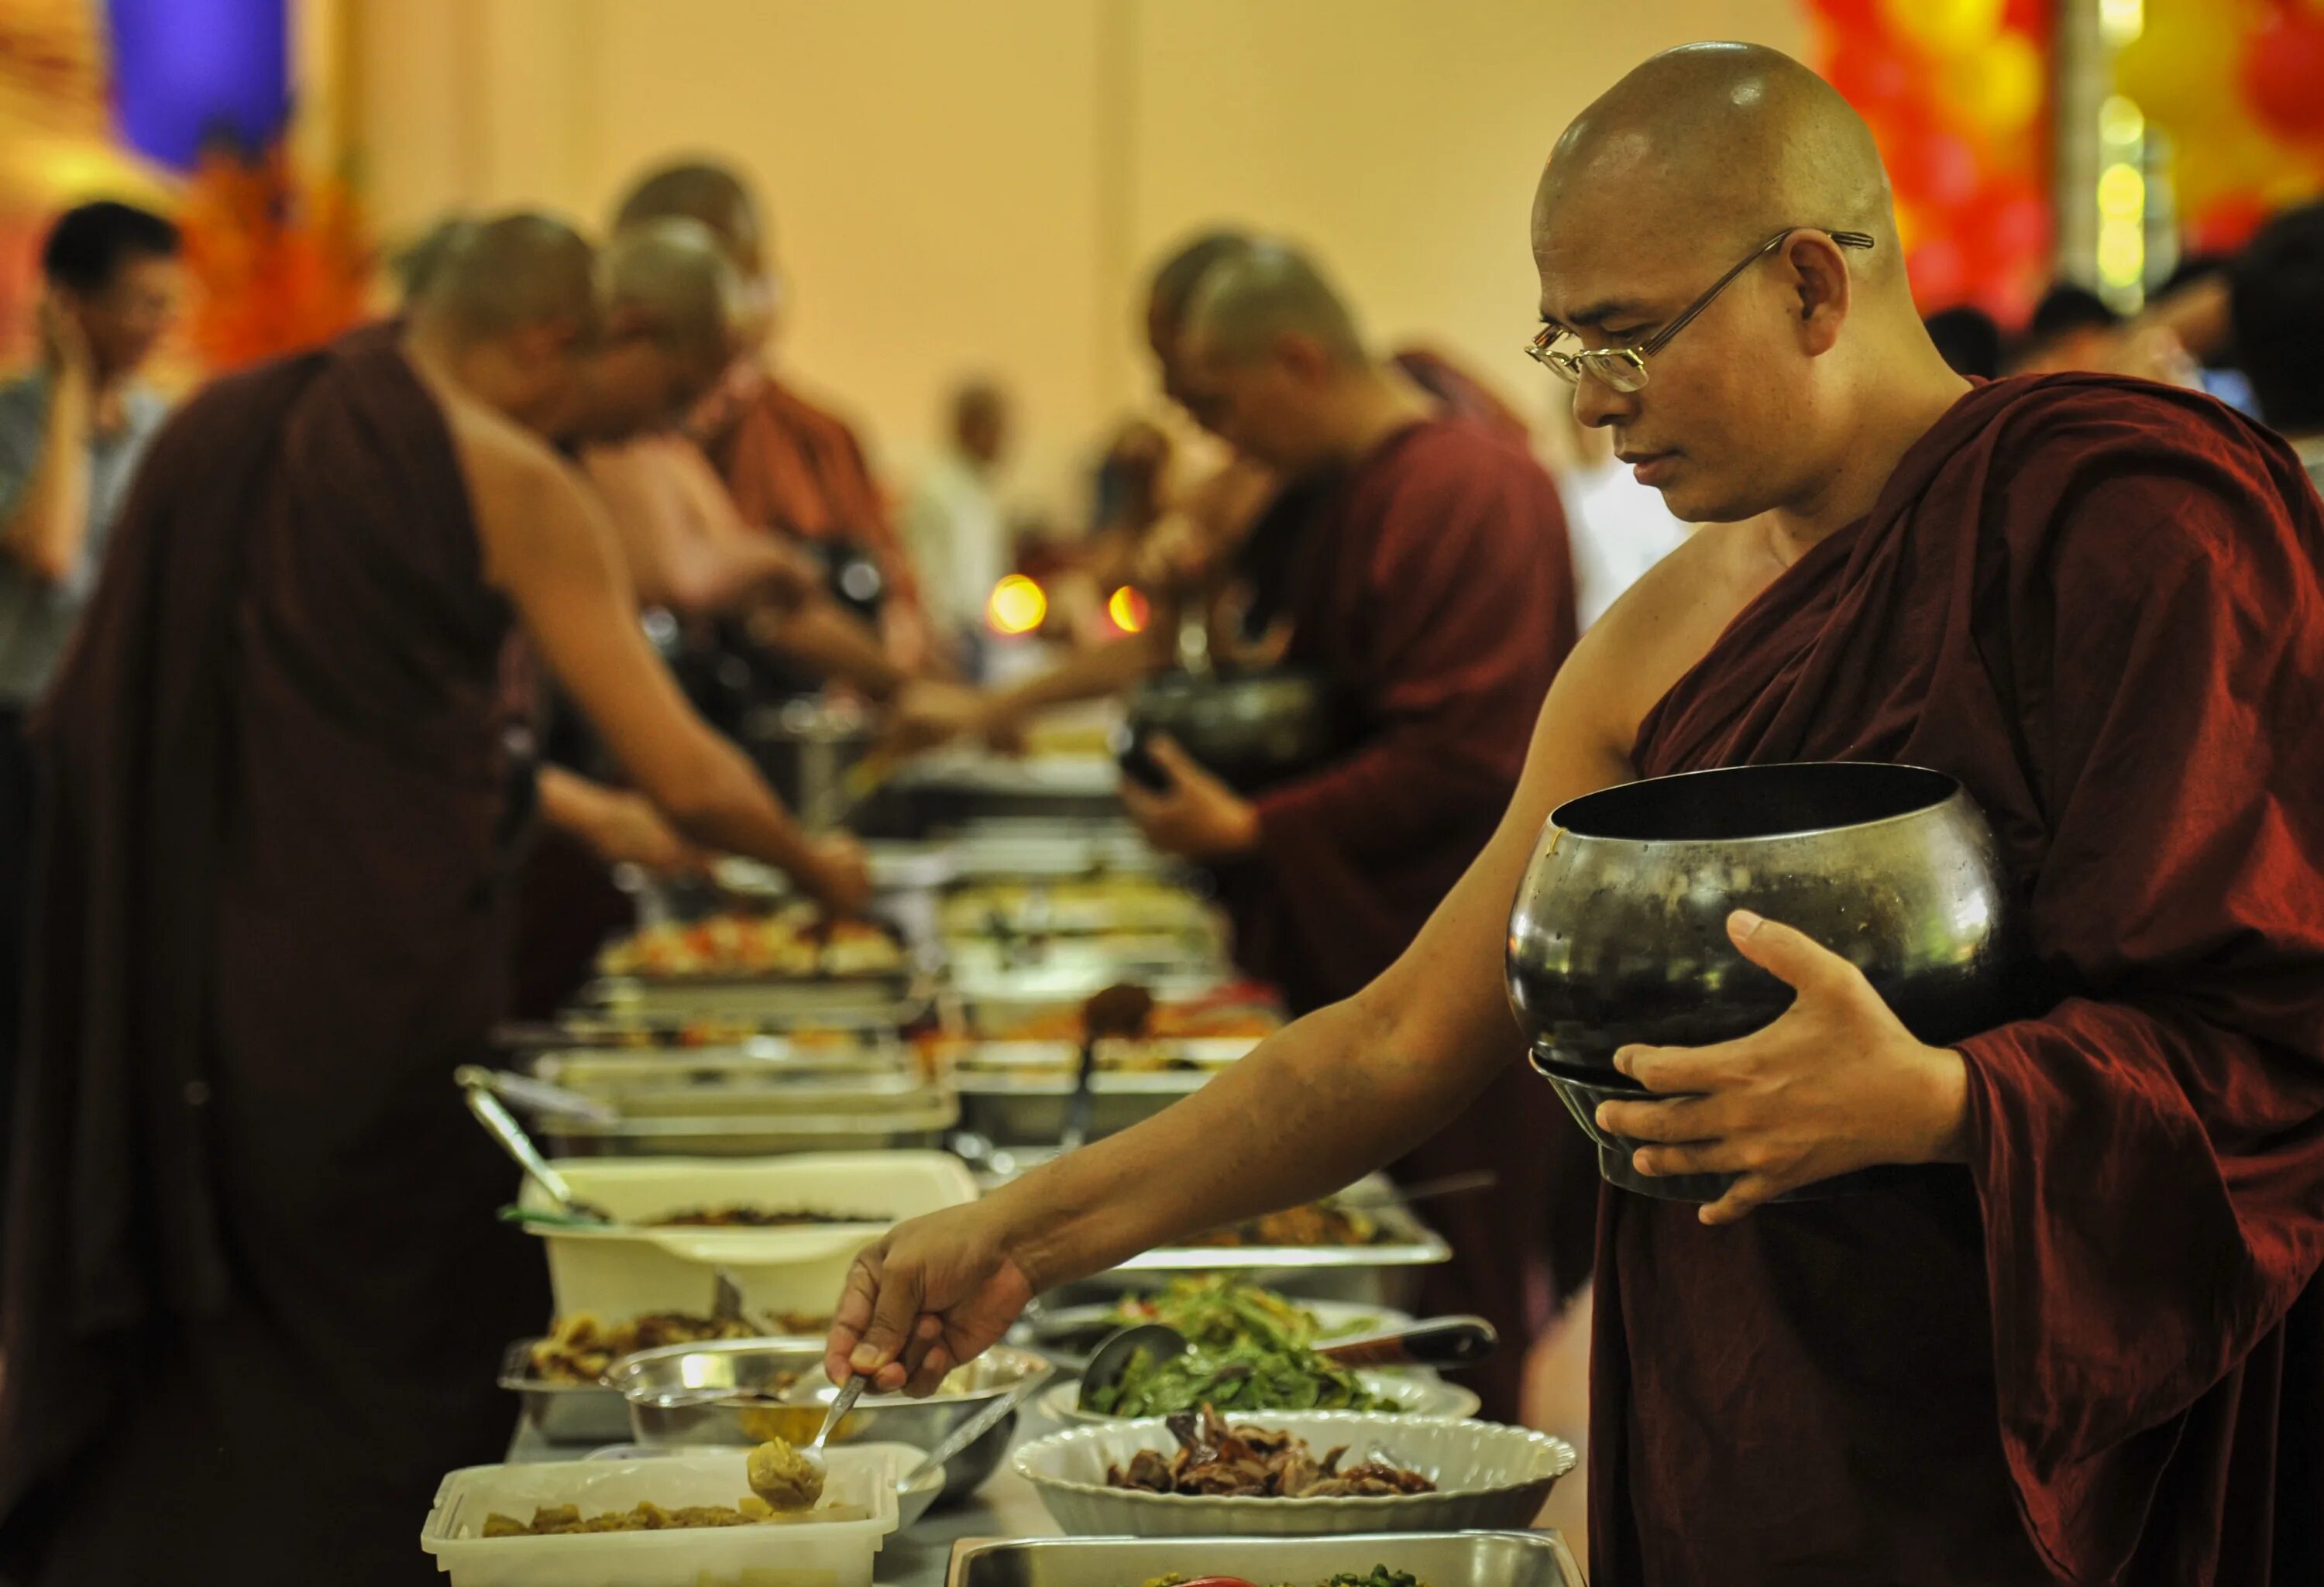 Монахи едят мясо. Буддизм Тхеравада храм. Буддийский монах Тхеравада. Тхеравада традиция буддизма. Буддийская кухня.